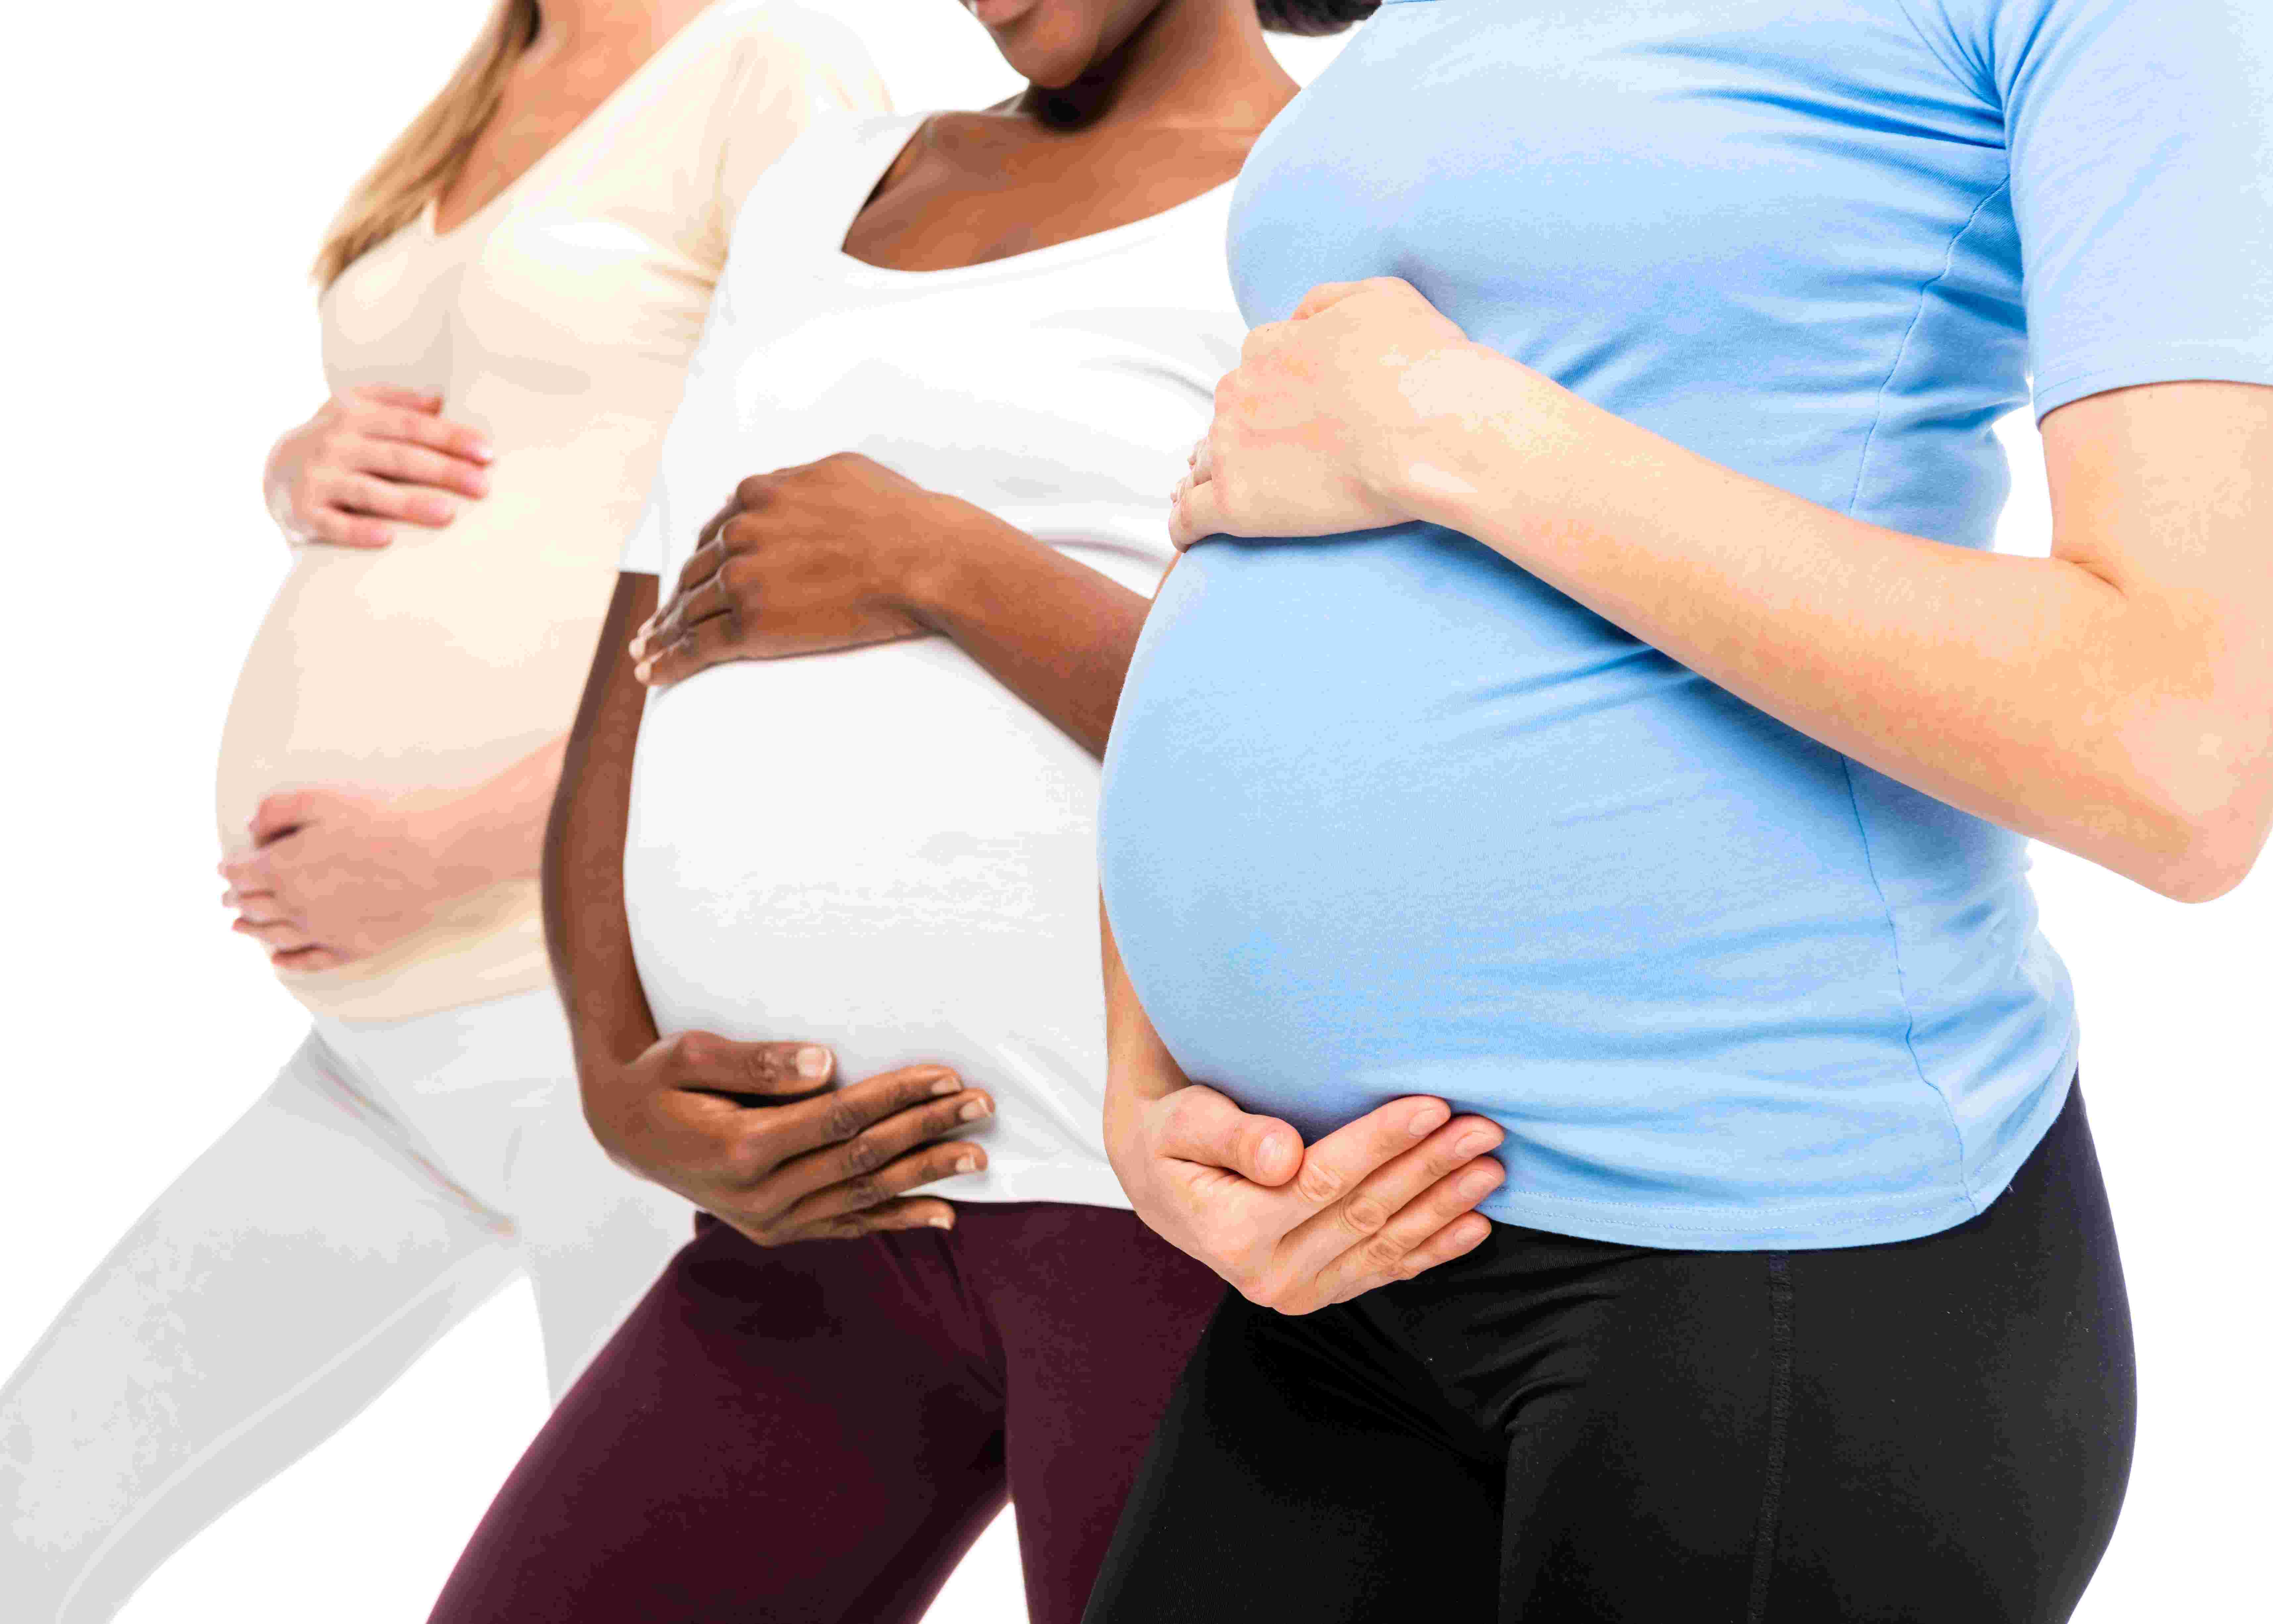 Three pregnant women